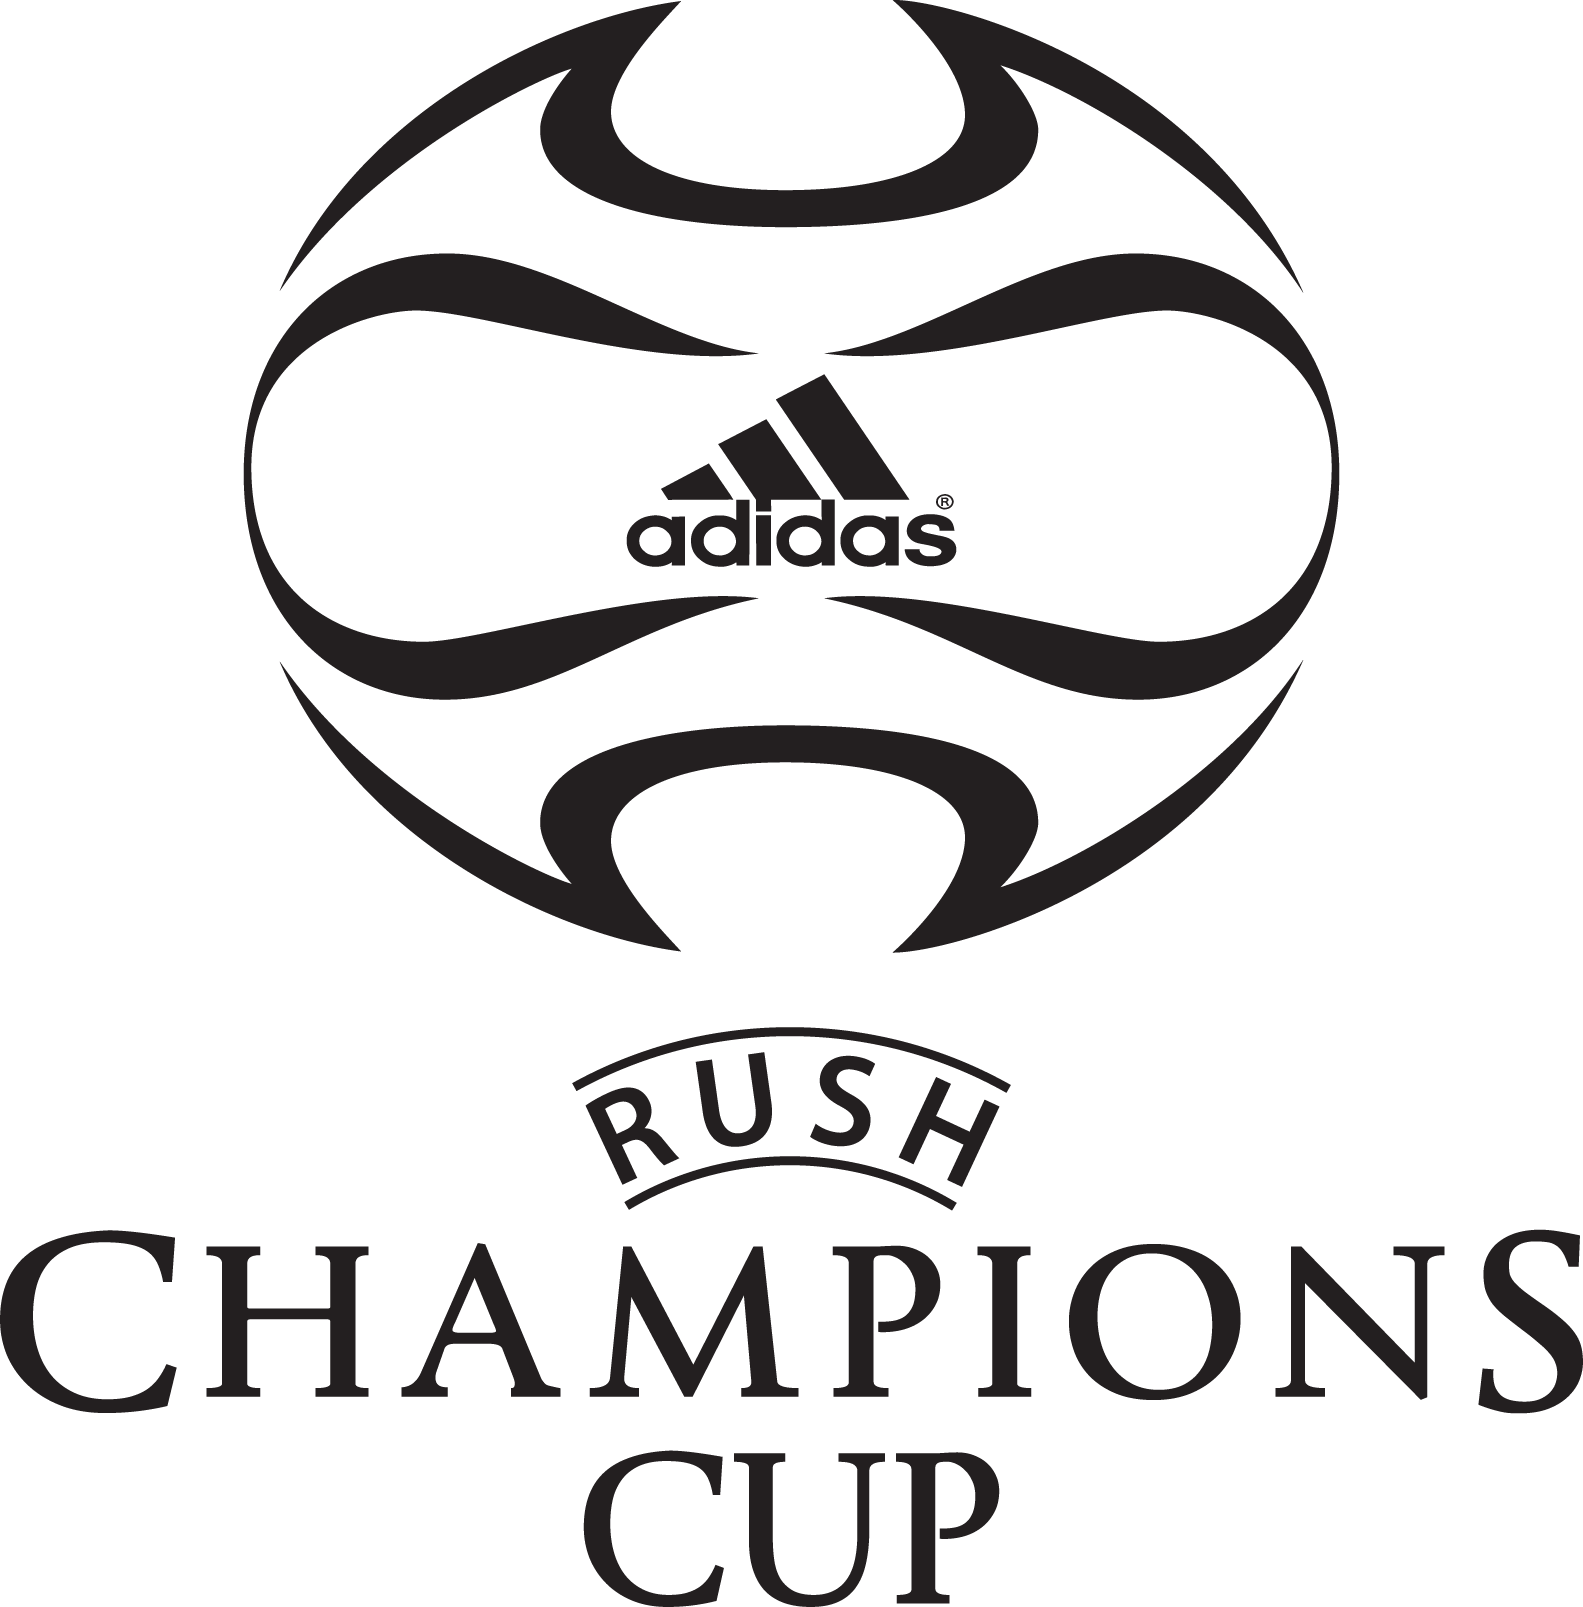 Champs Logo - RUSH CHAMPS CUP LOGO - Virginia Rush Soccer Club